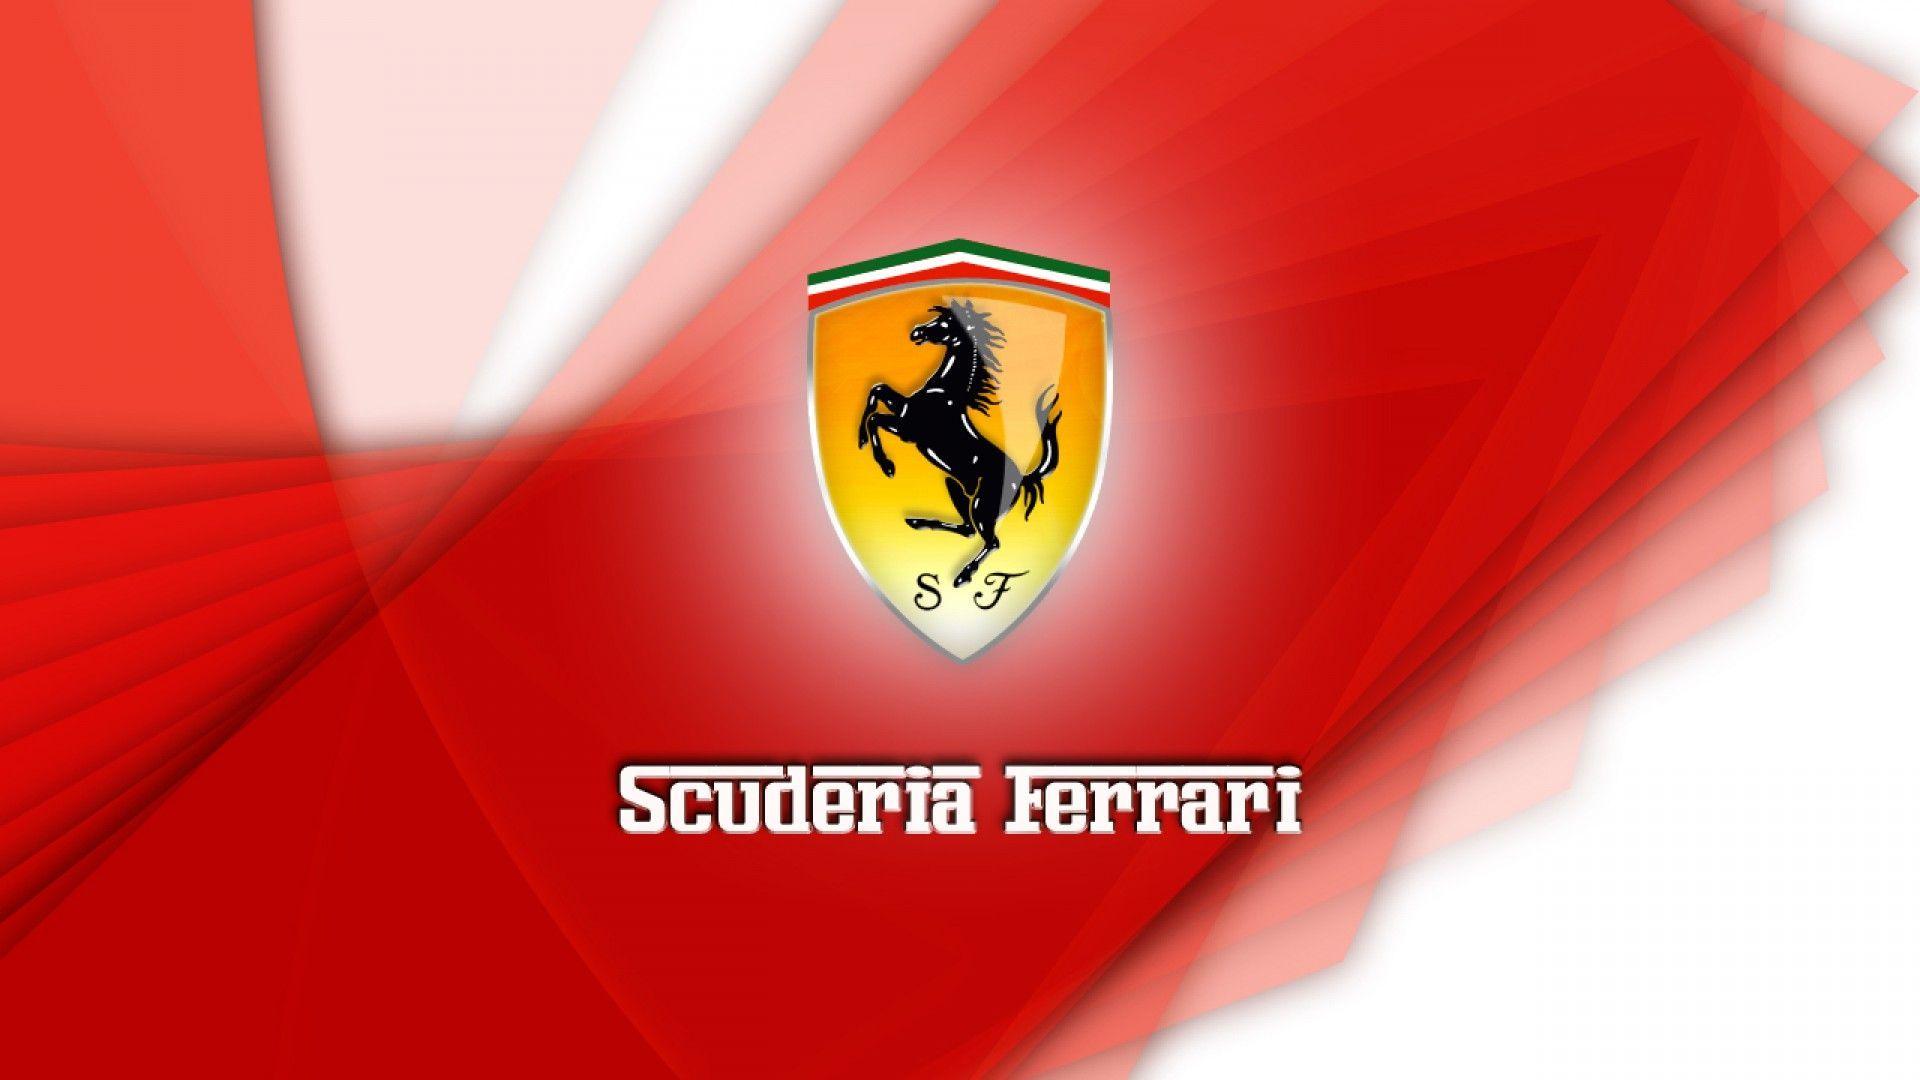 Ferrari Scuderia Logo Wallpaper. Download High Quality Resolution